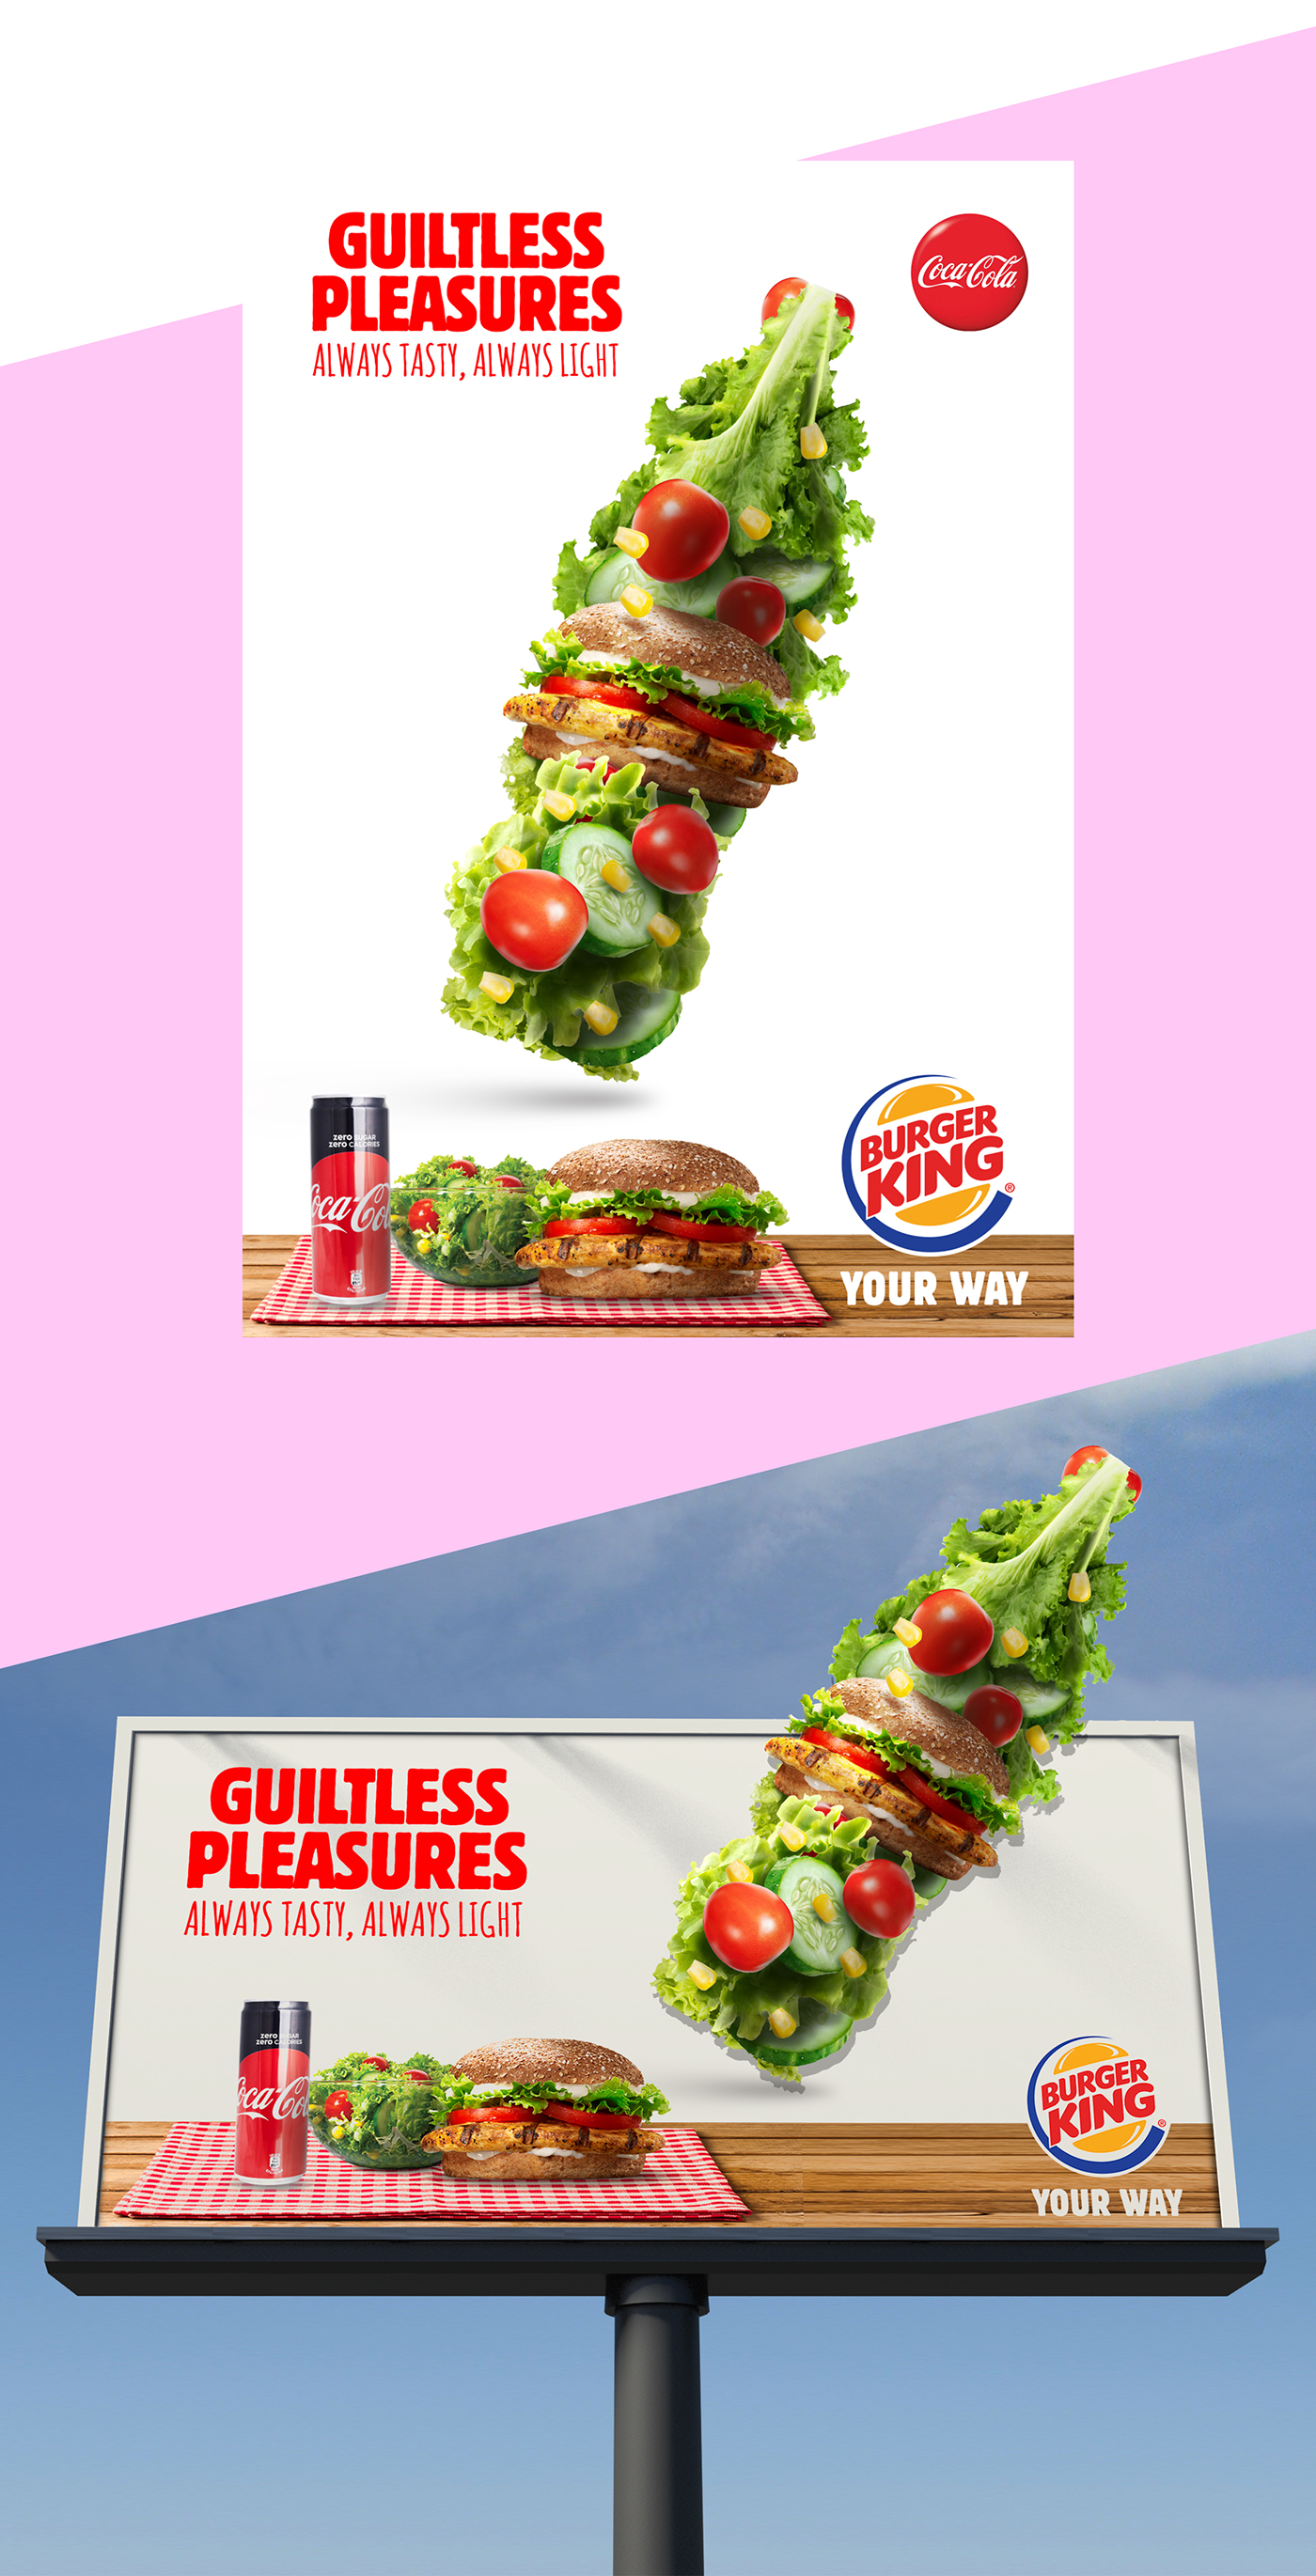 Burger King cokacola Coke Zero photomanipulation bottle burger sandwich salad green healthy